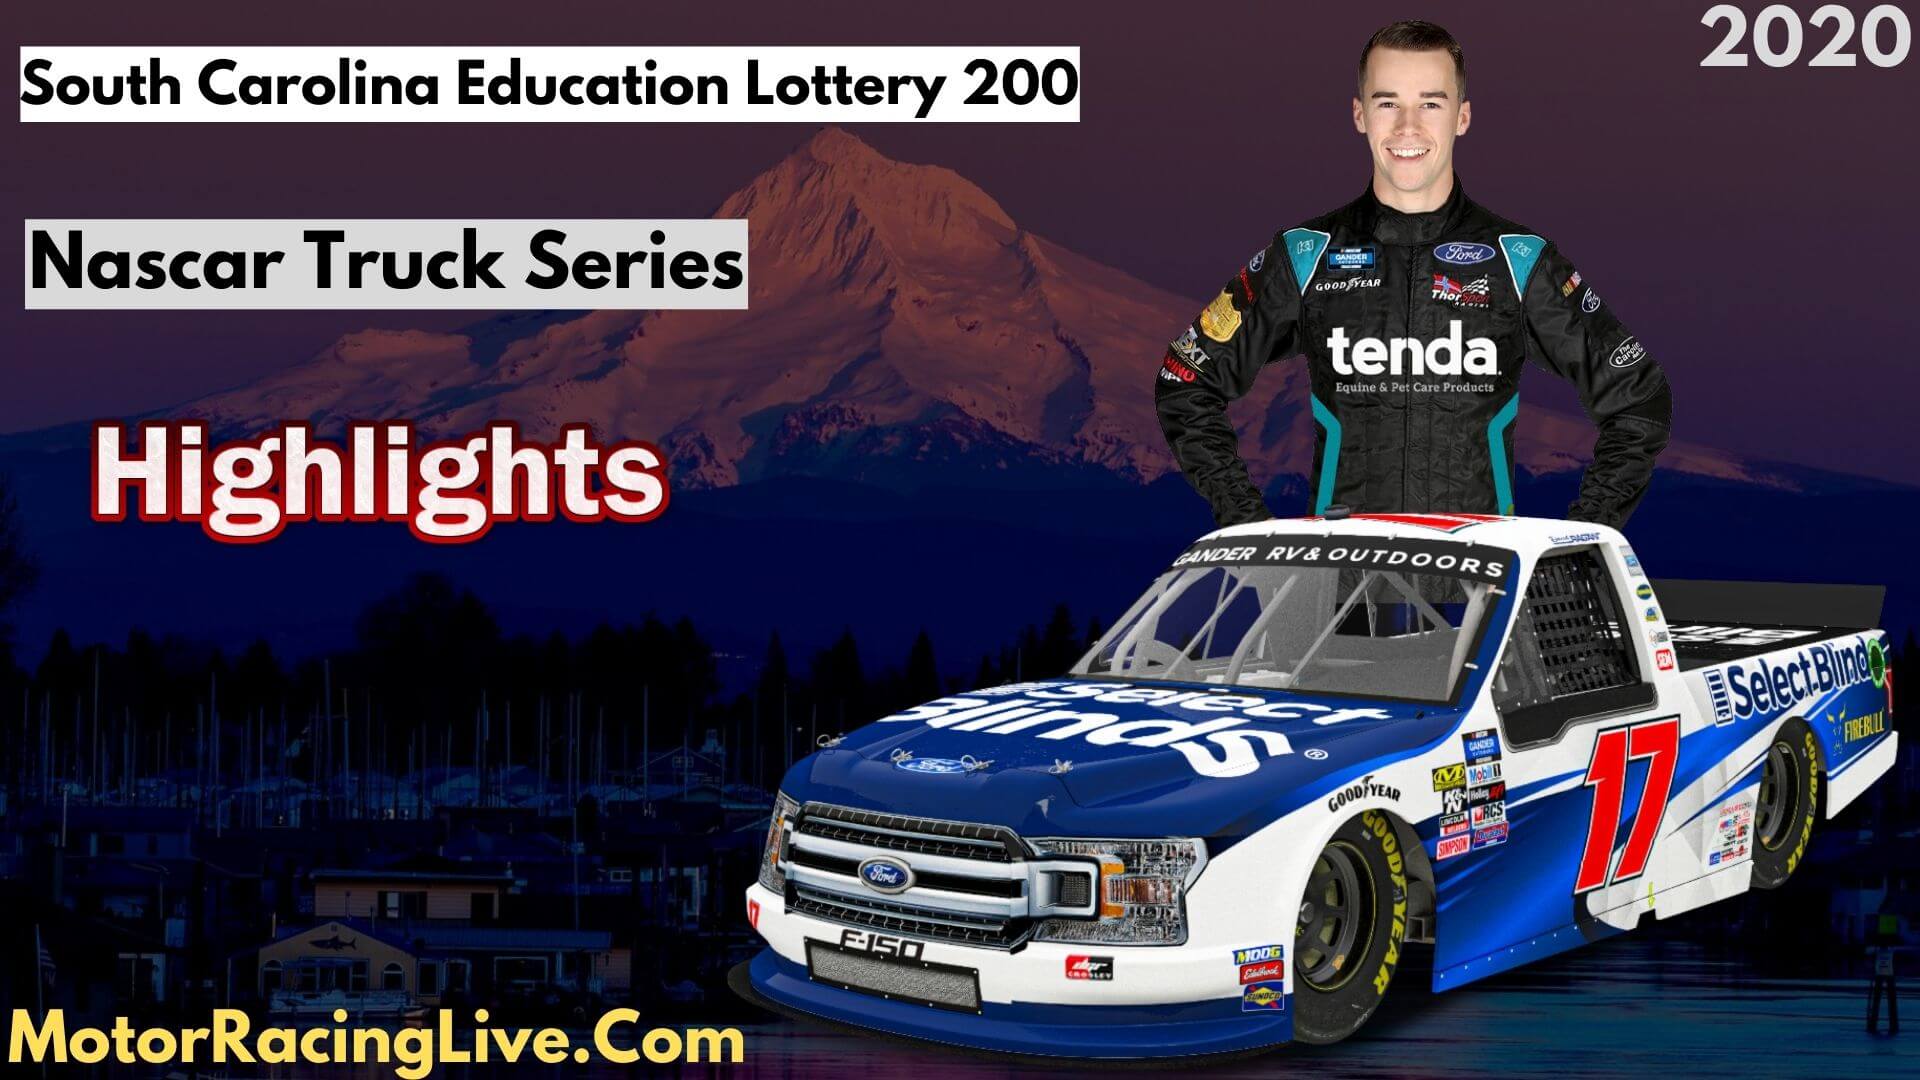 South Carolina Education Lottery 200 Highlights Truck Series 2020